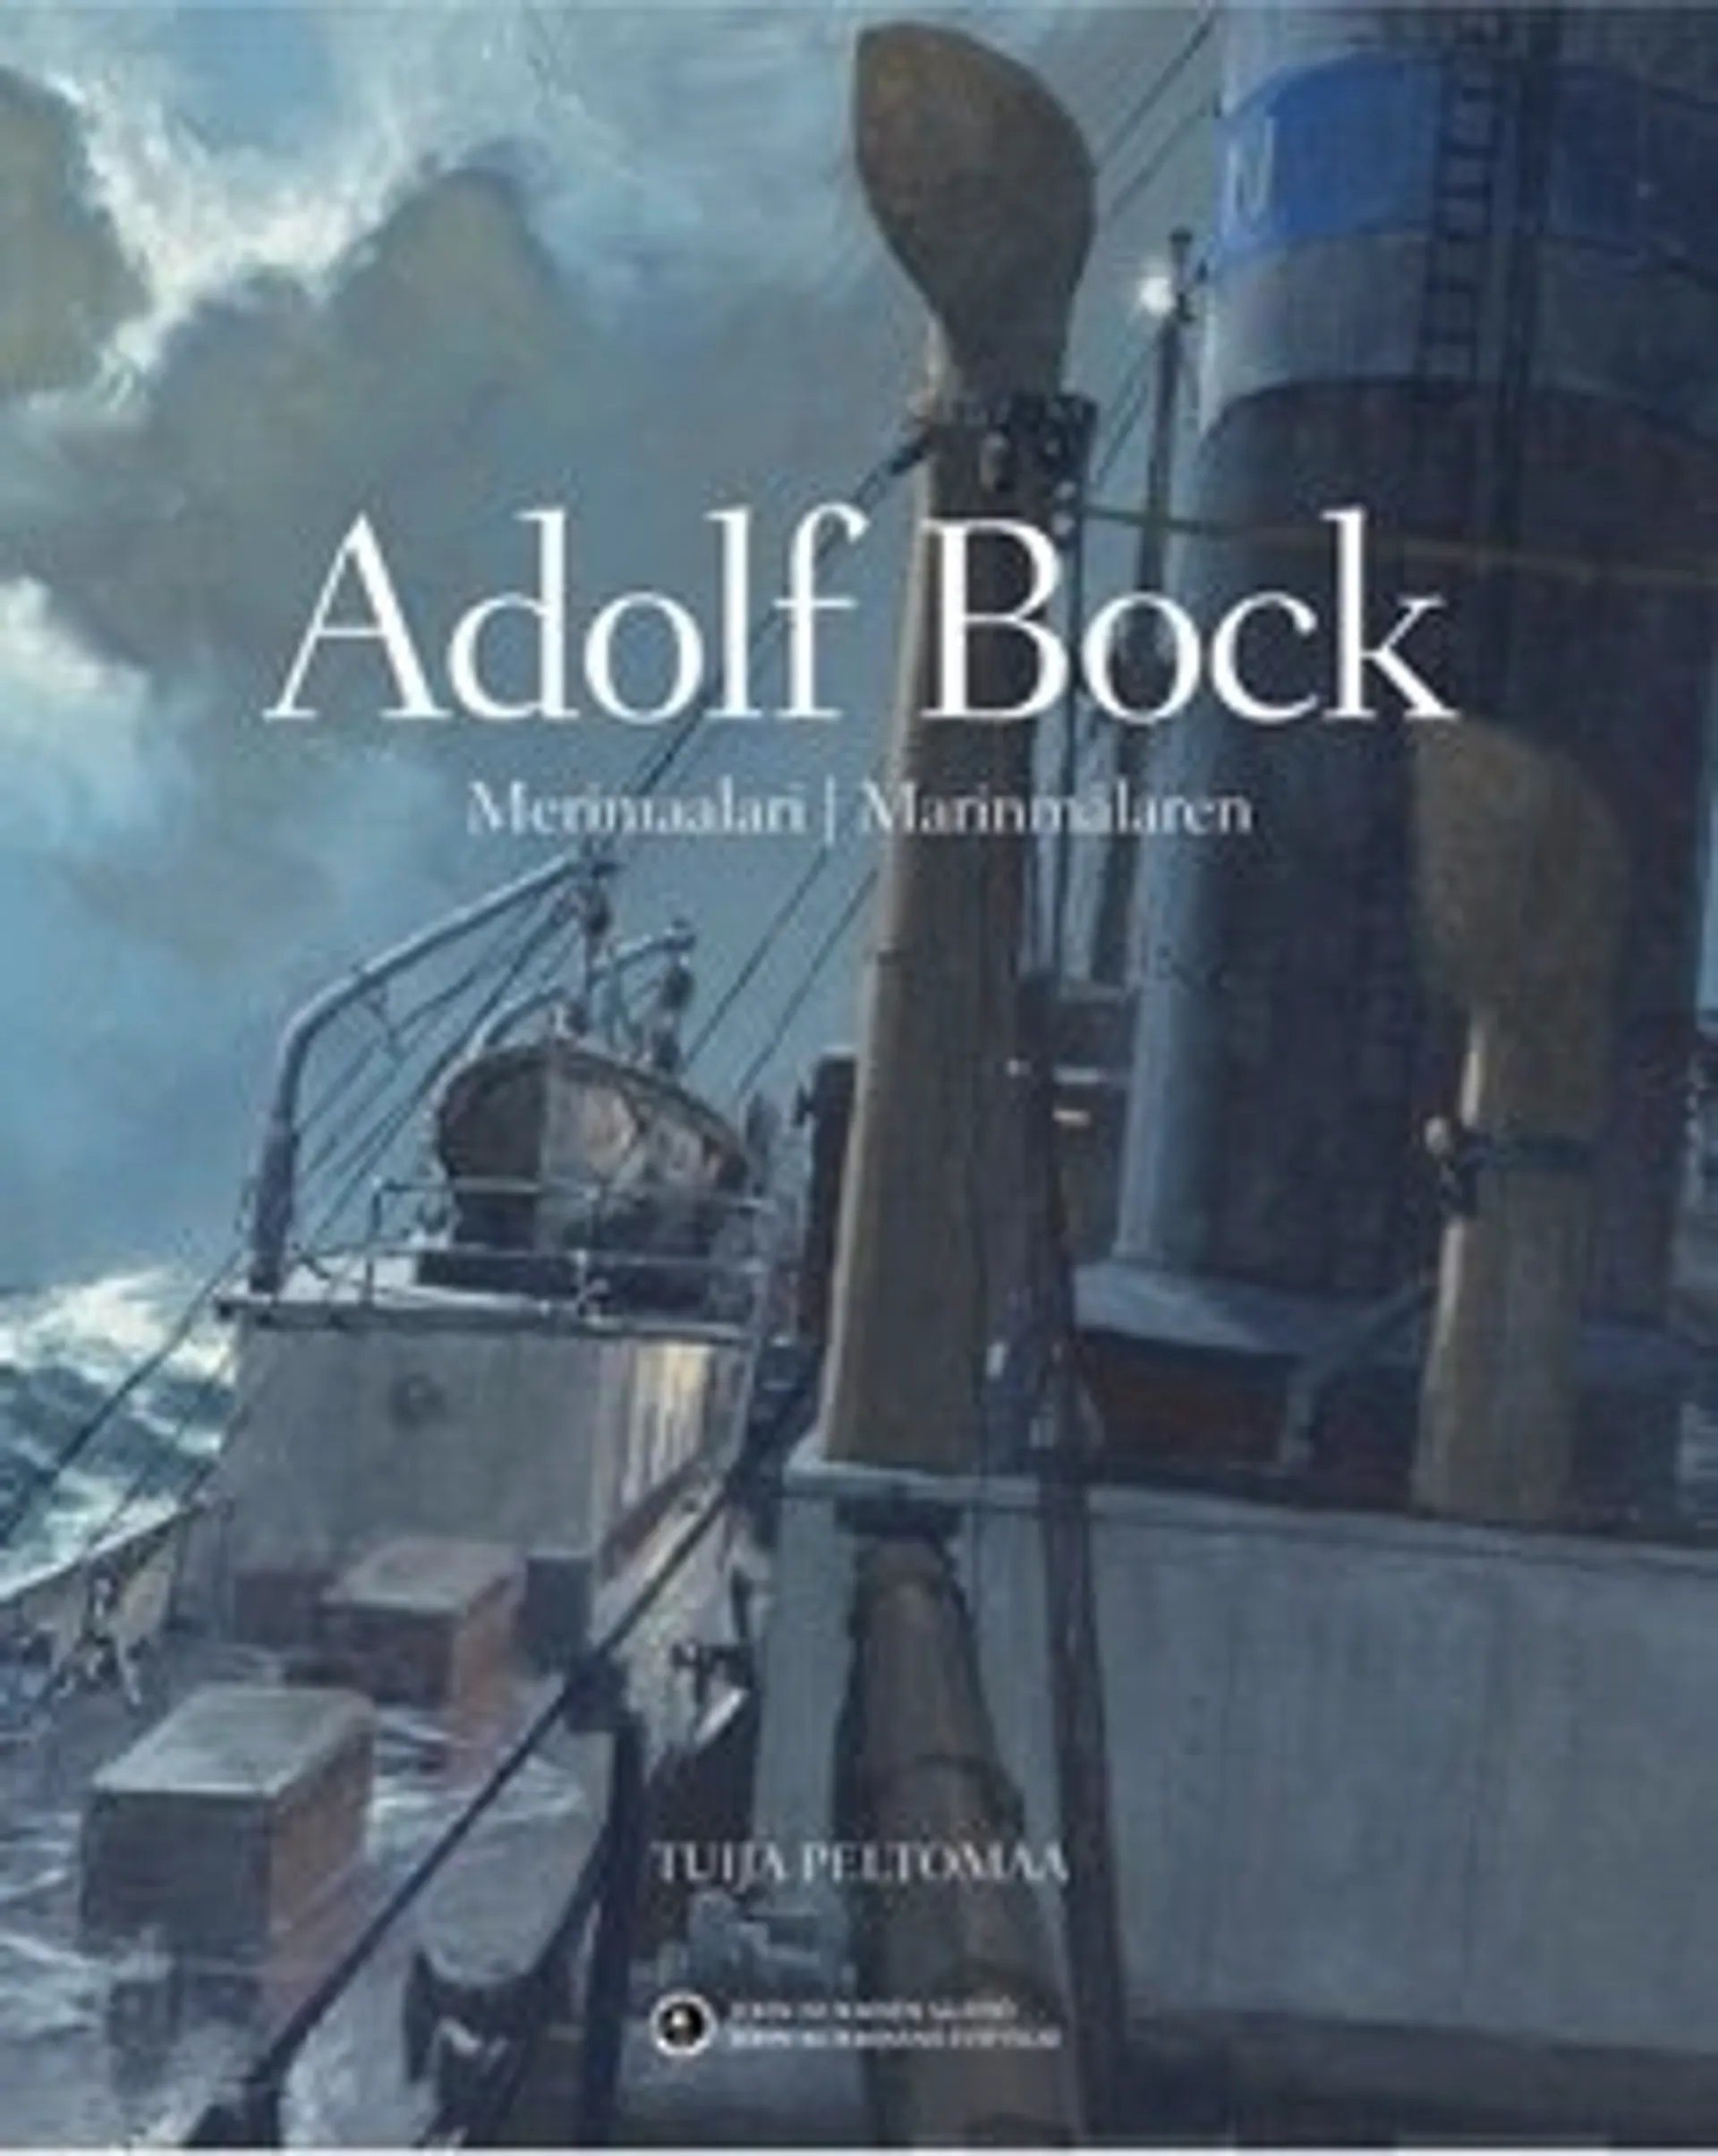 Adolf Bock